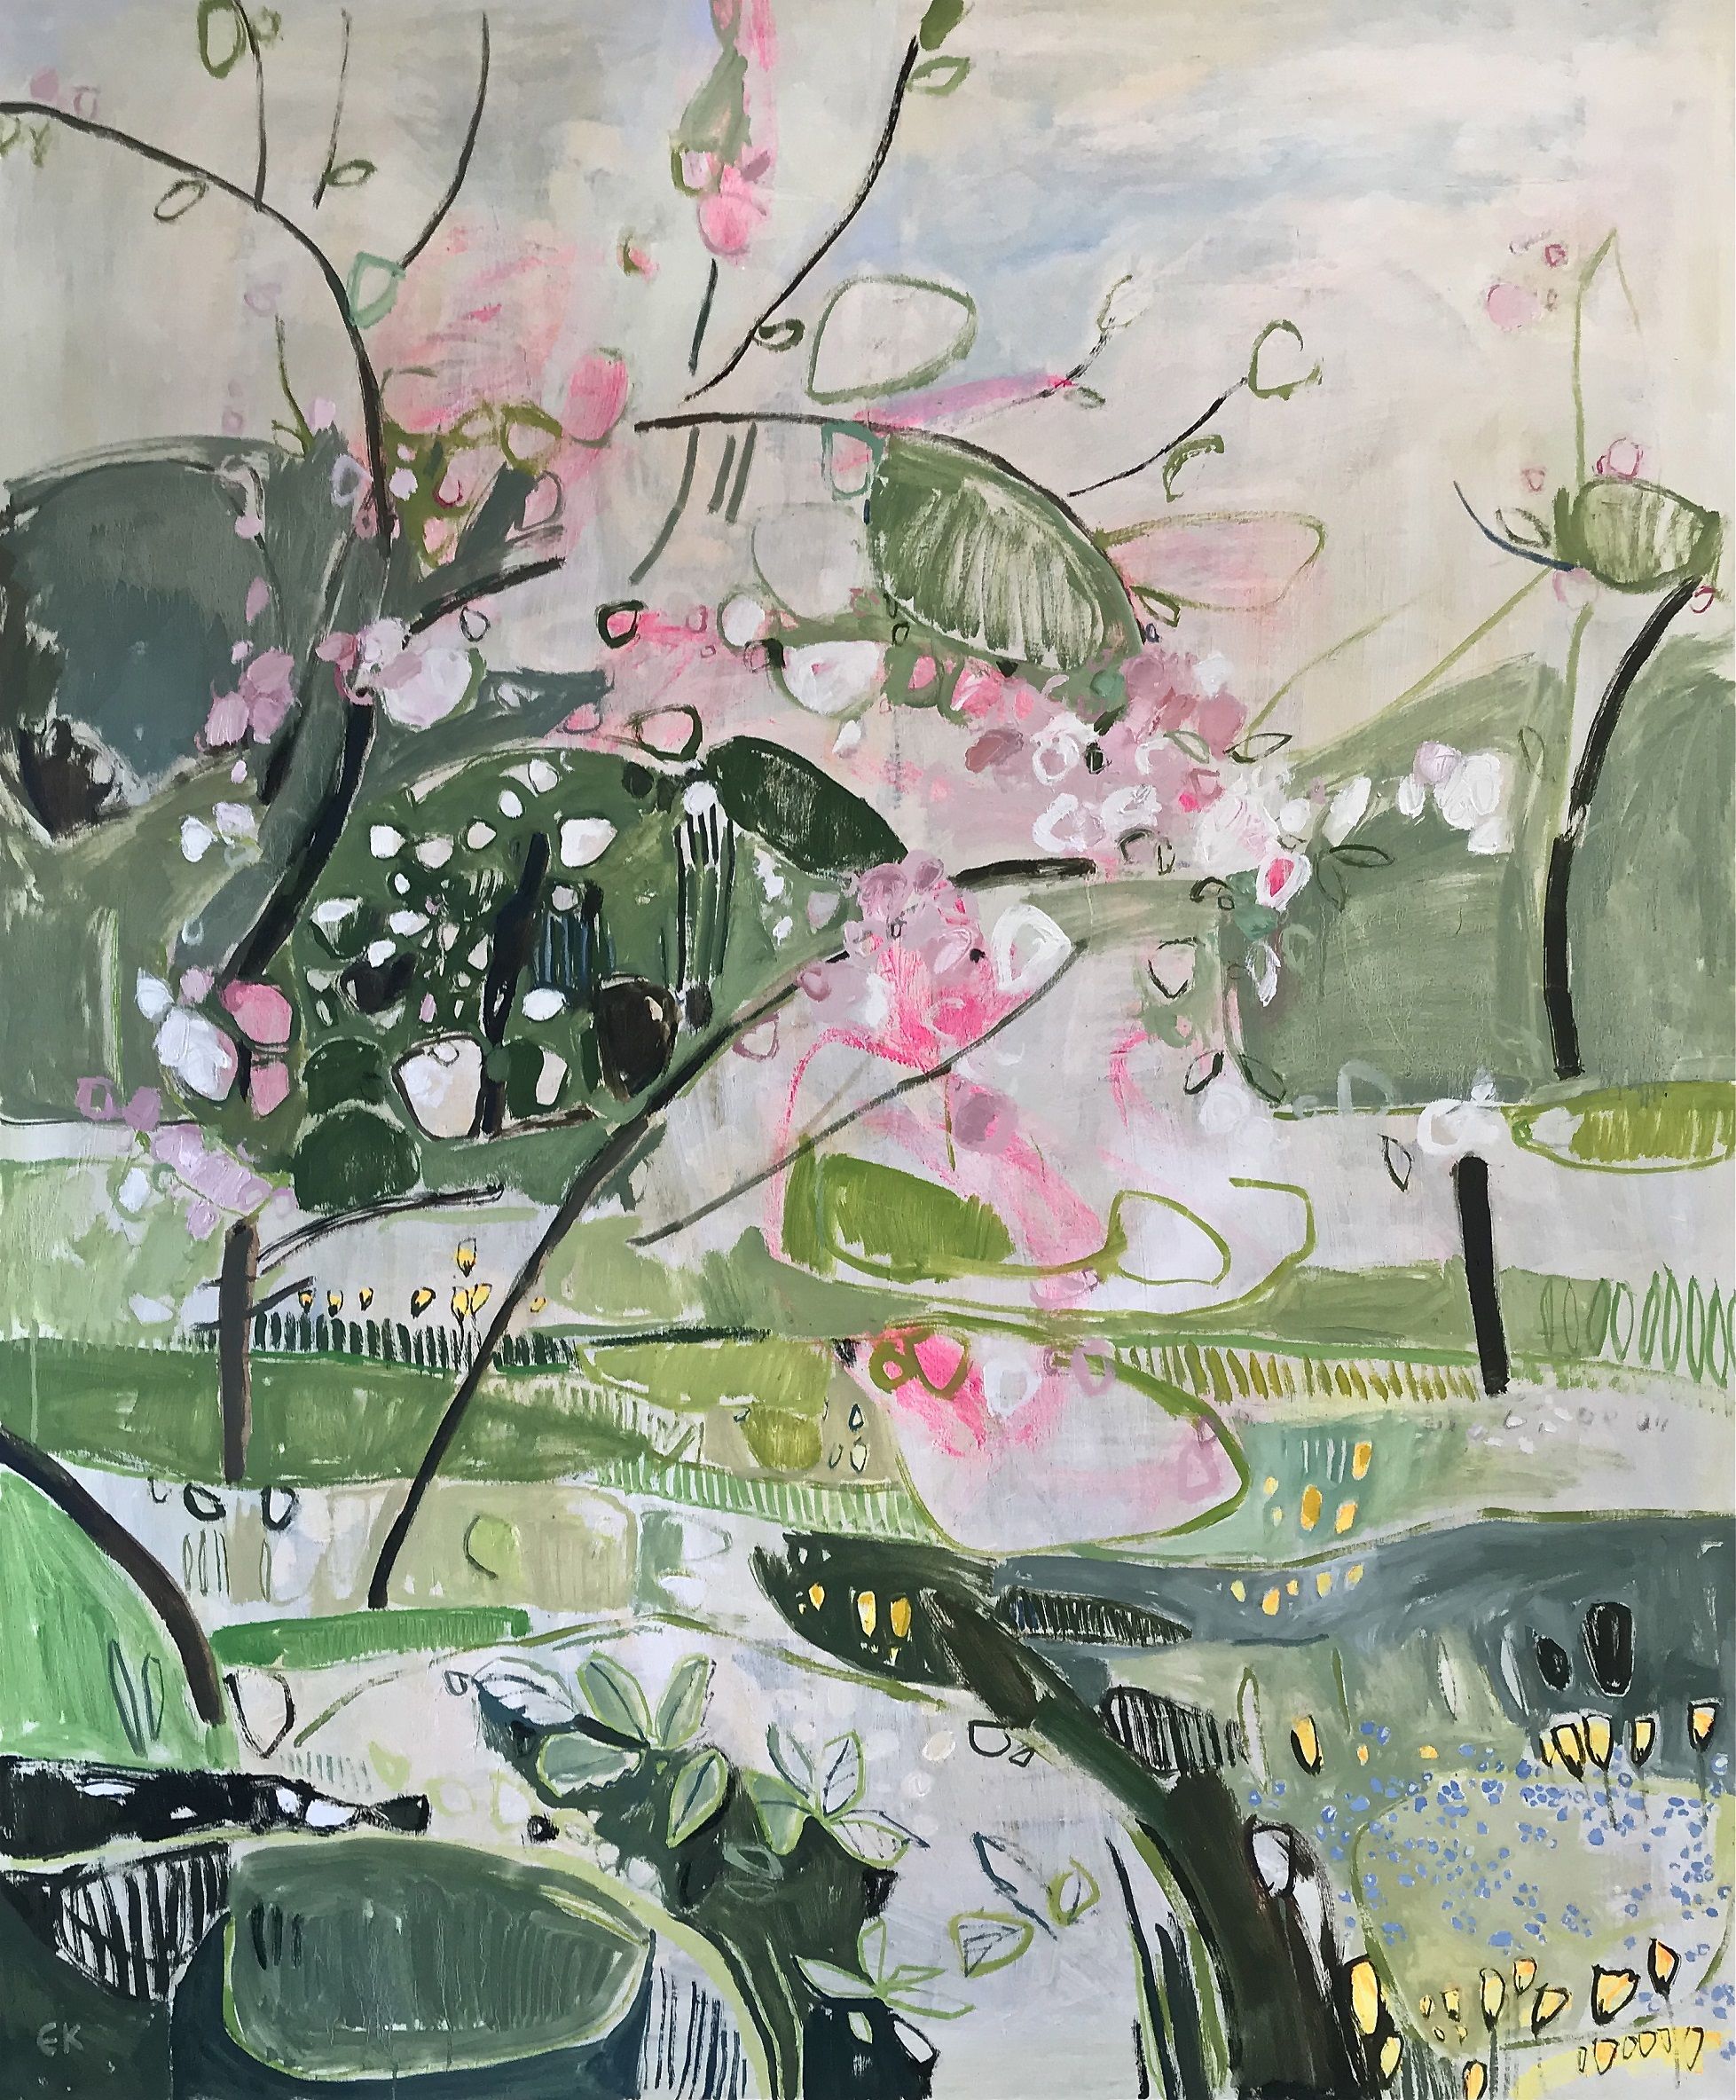 Apple Blossom at Botley Road Allotments I, Oxford by Elaine Kazimierczuk